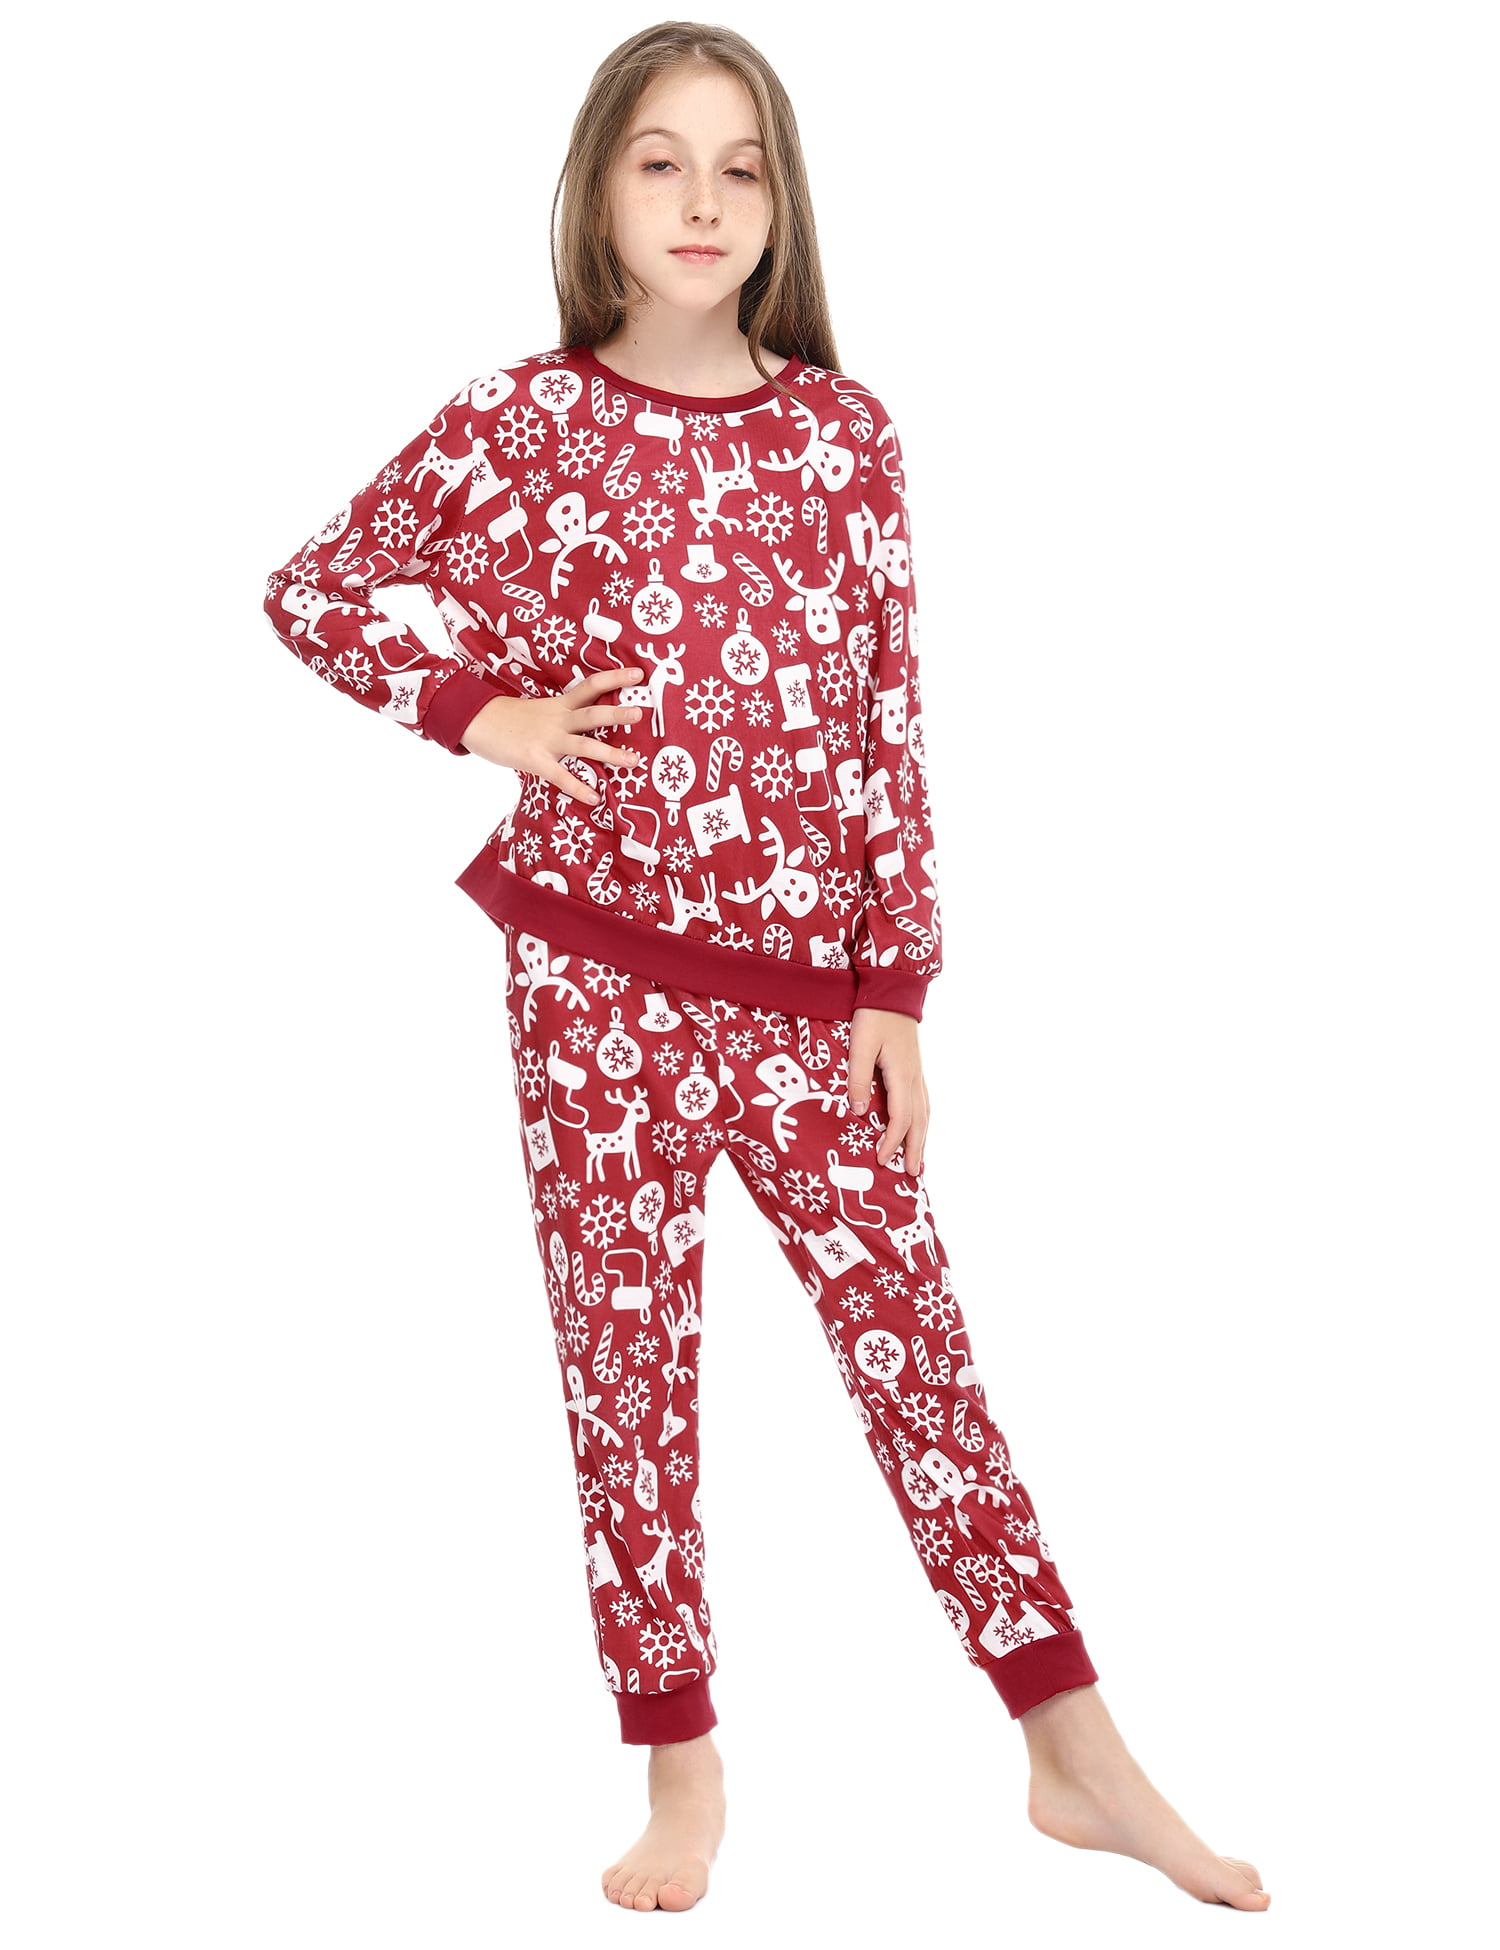 Doaraha Matching Family Pajamas Sets Christmas PJs with Reindeer Printed Long Sleeve Tee and Pants Loungewear for Adults